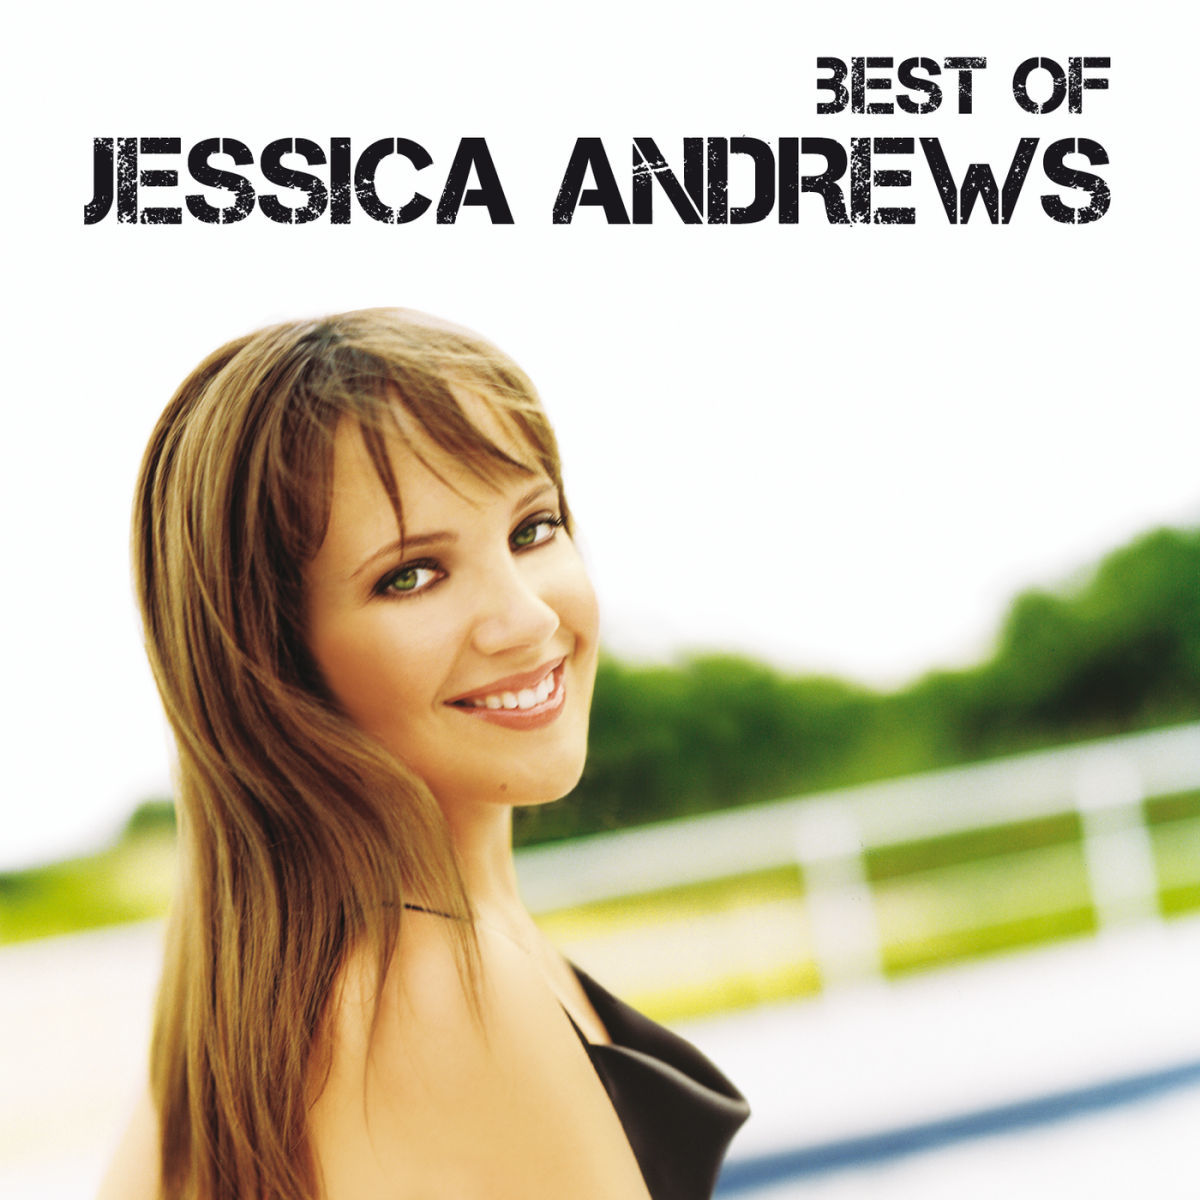 Jessica Andrews - Best Of Jessica Andrews (2010)